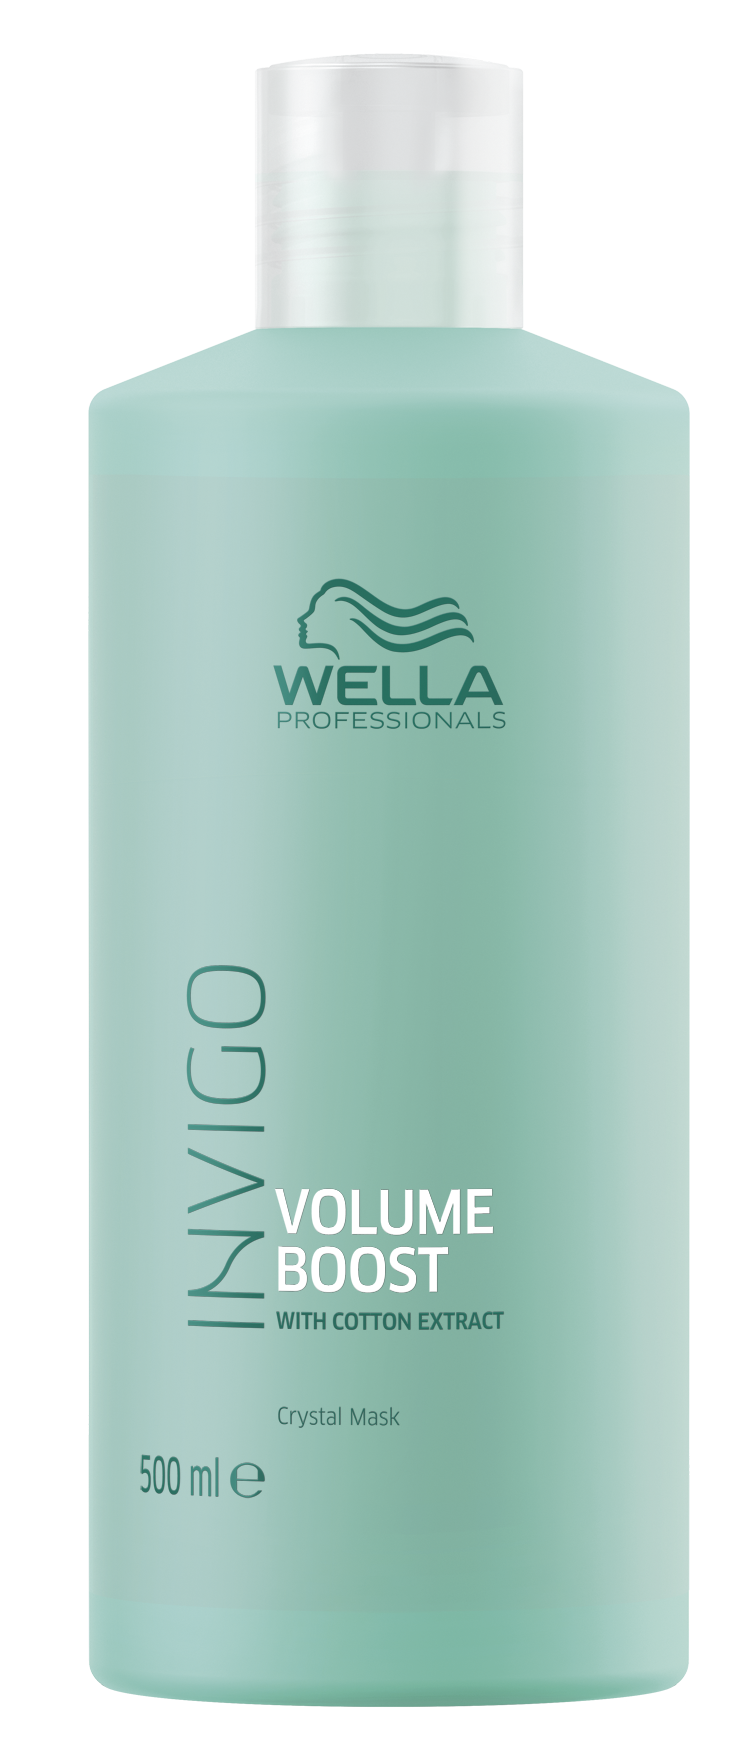 WELLA PROFESSIONALS Маска-кристалл уплотняющая / Volume Boost 500 мл wella professionals уплотняющая кристалл маска invigo volume boost 500 0